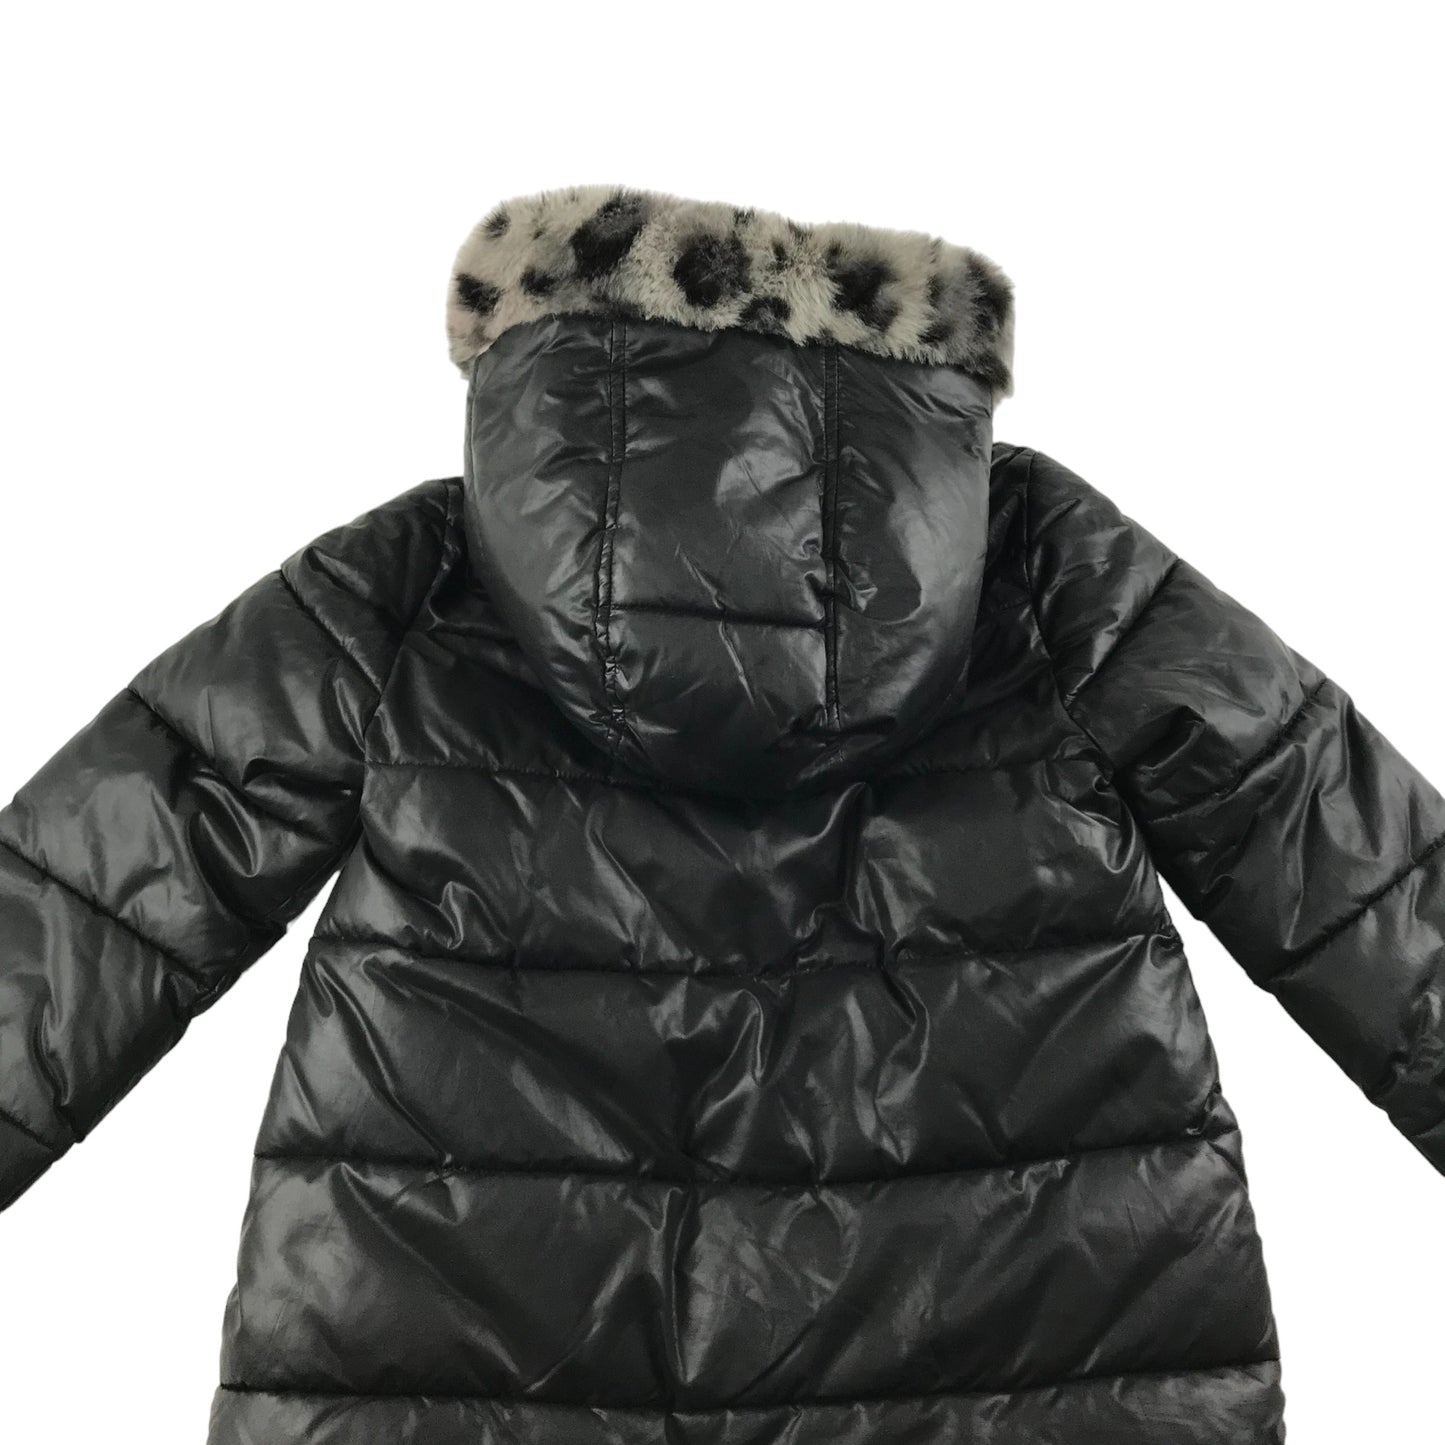 MK Jacket Age 7 Black Puffer Parka Leopard Spots Printed Fleece Hood Trim